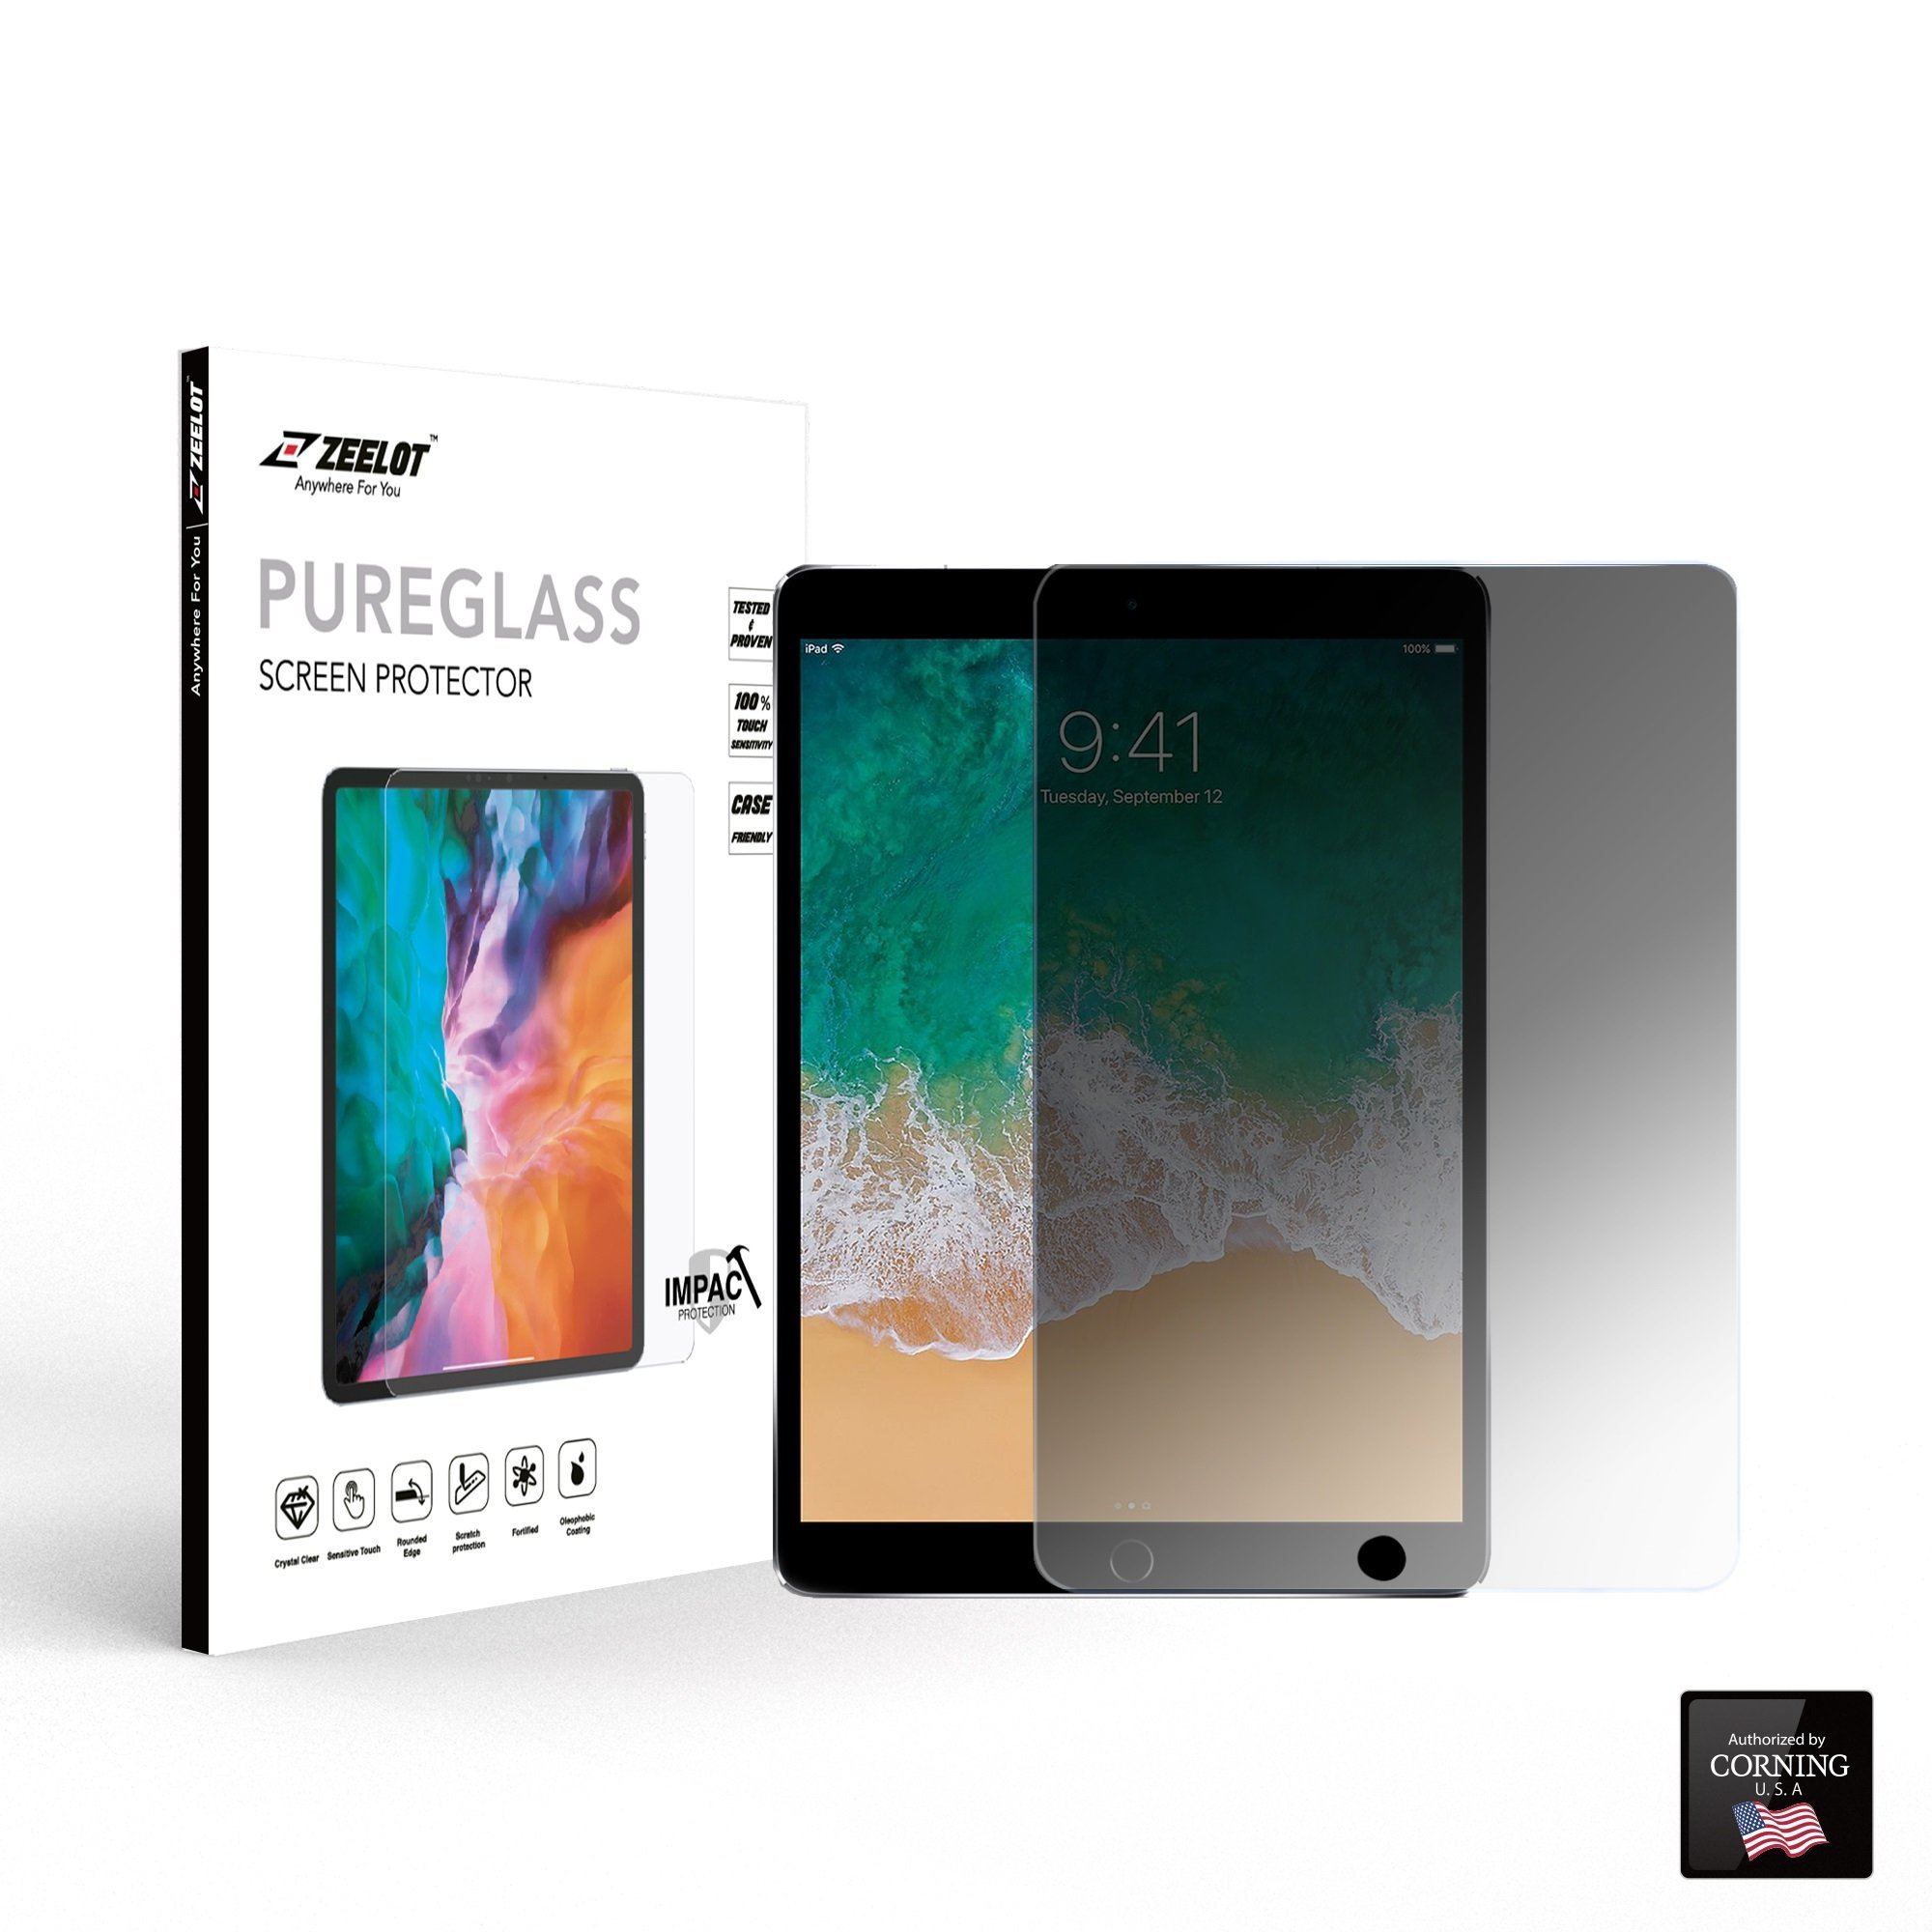 ZEELOT PureGlass 2.5D Tempered Glass Screen Protector for iPad Air/Pro 10.5" (2019/2017), Privacy Default ZEELOT 